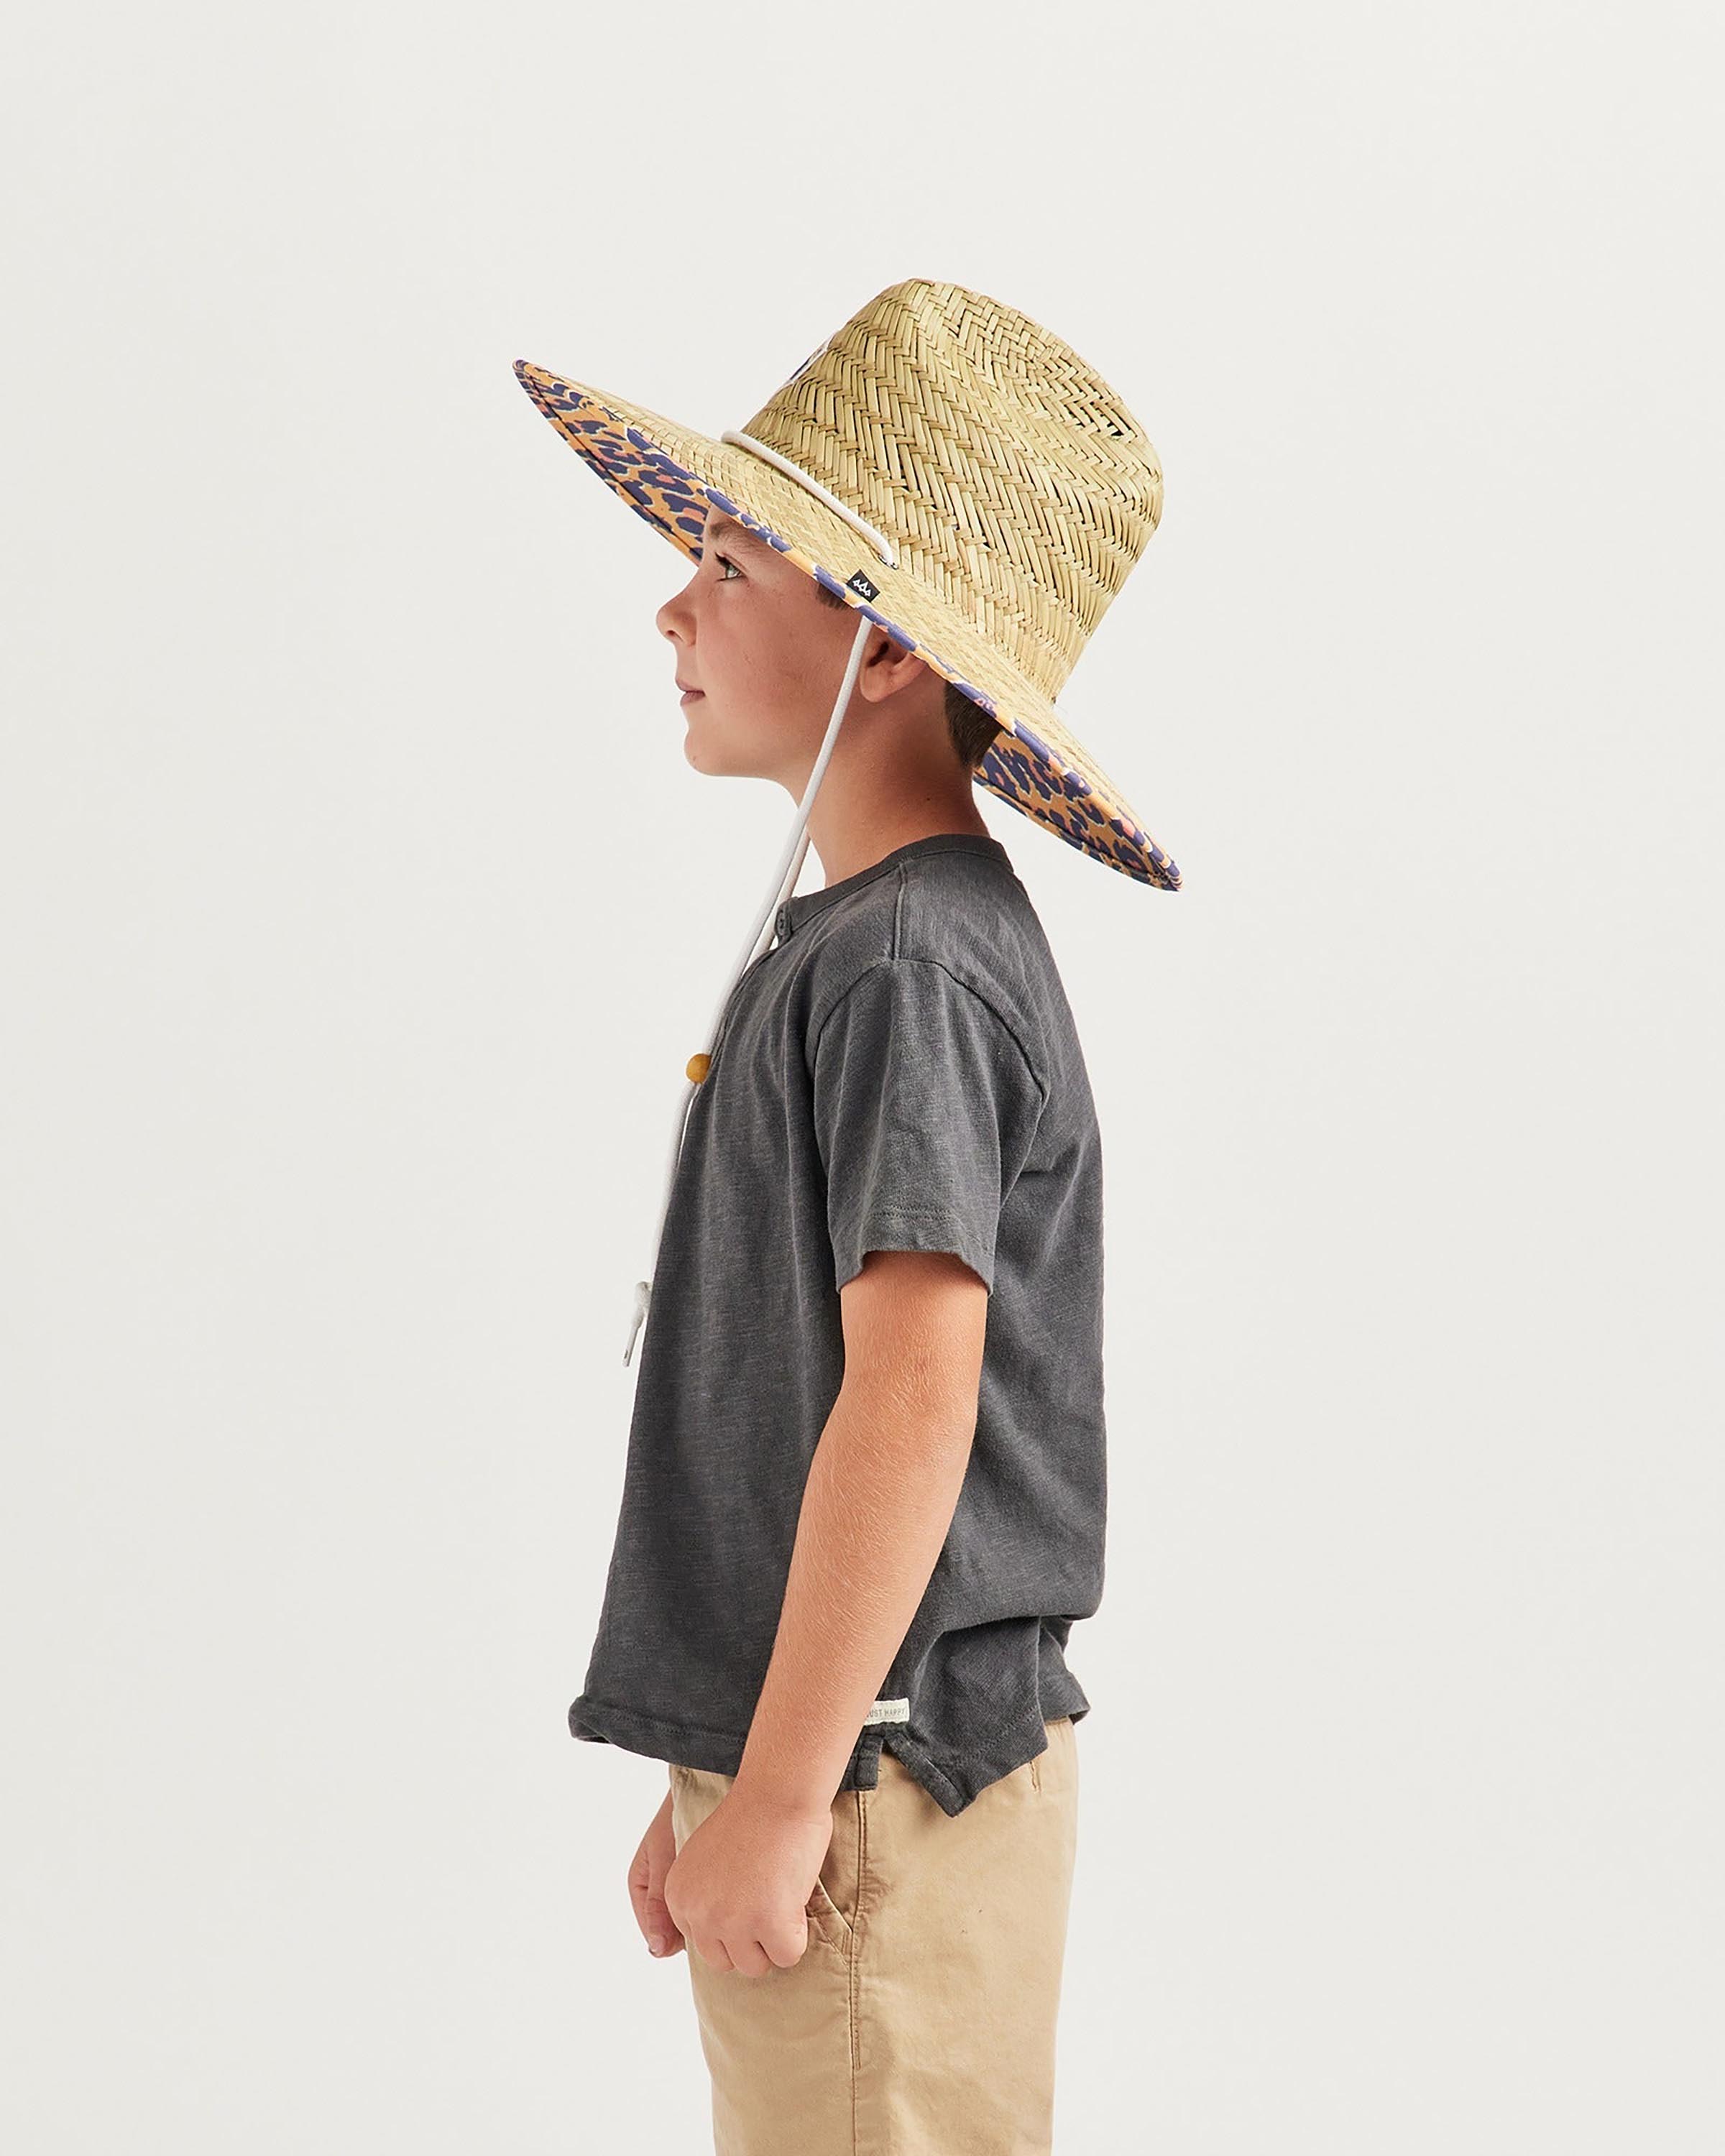 Hemlock Boy model wearing the Cub Big Kids Straw Lifeguard Hat